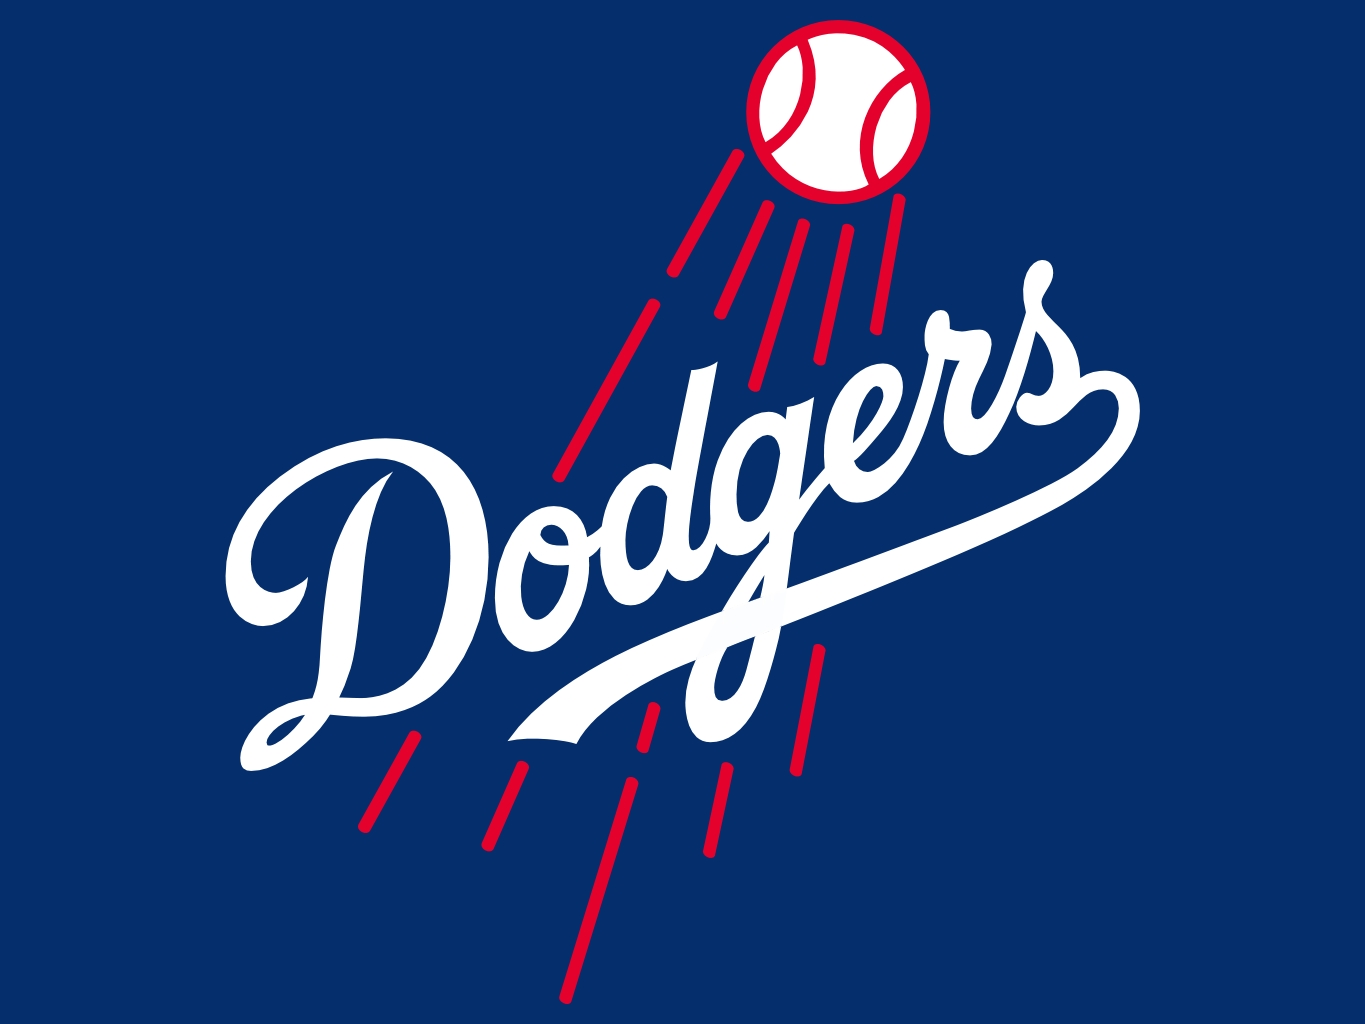 Angeles Dodgers Desktop Wallpaper High Definition